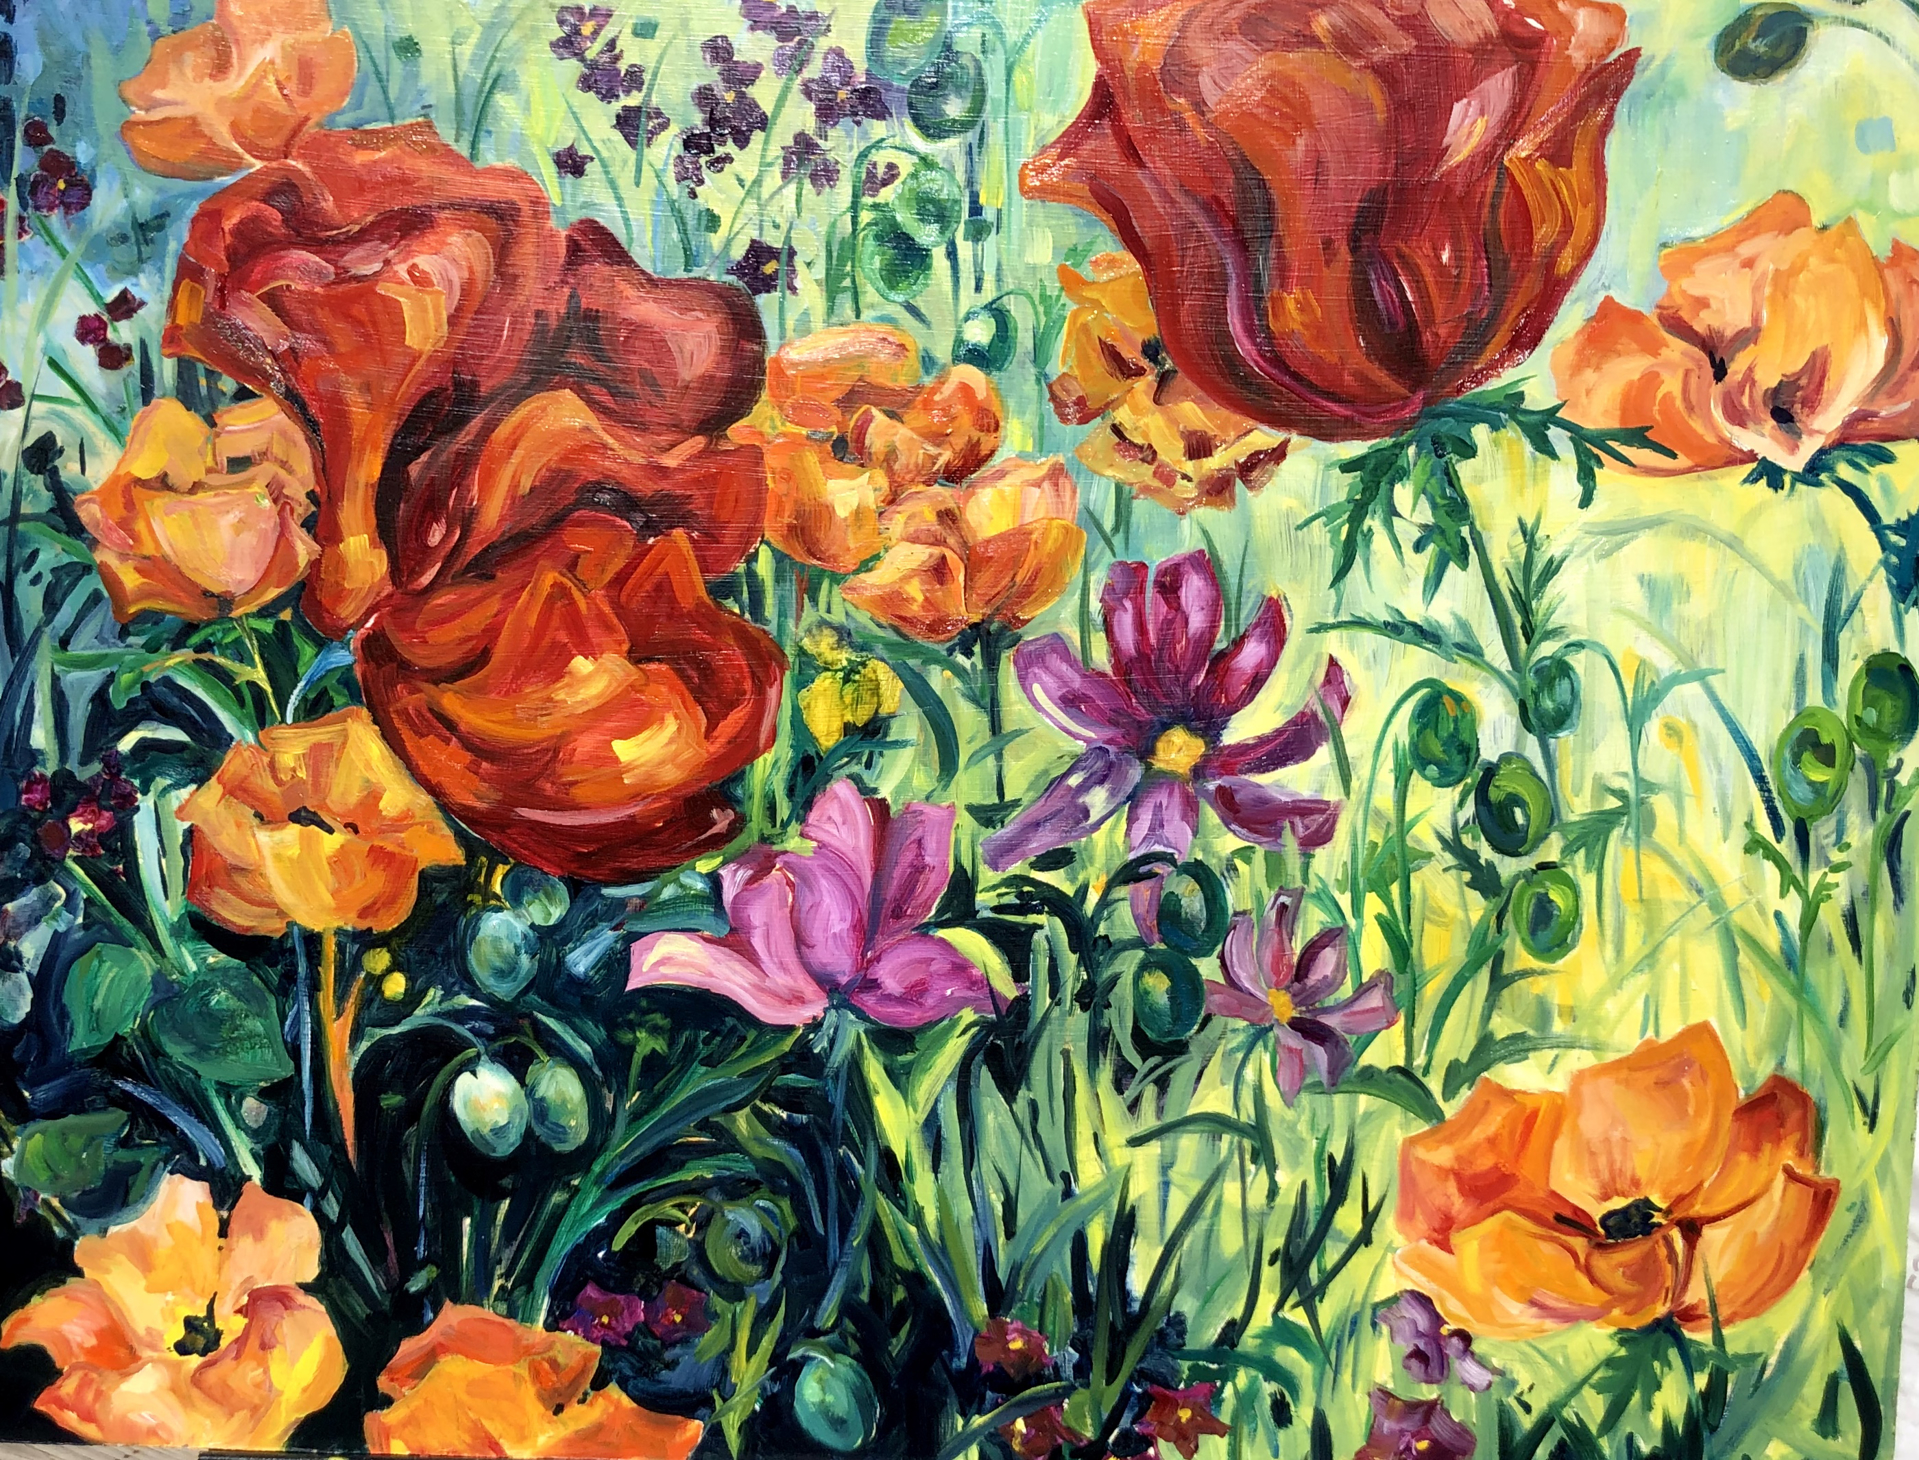 Flower Power by Connie Johnson